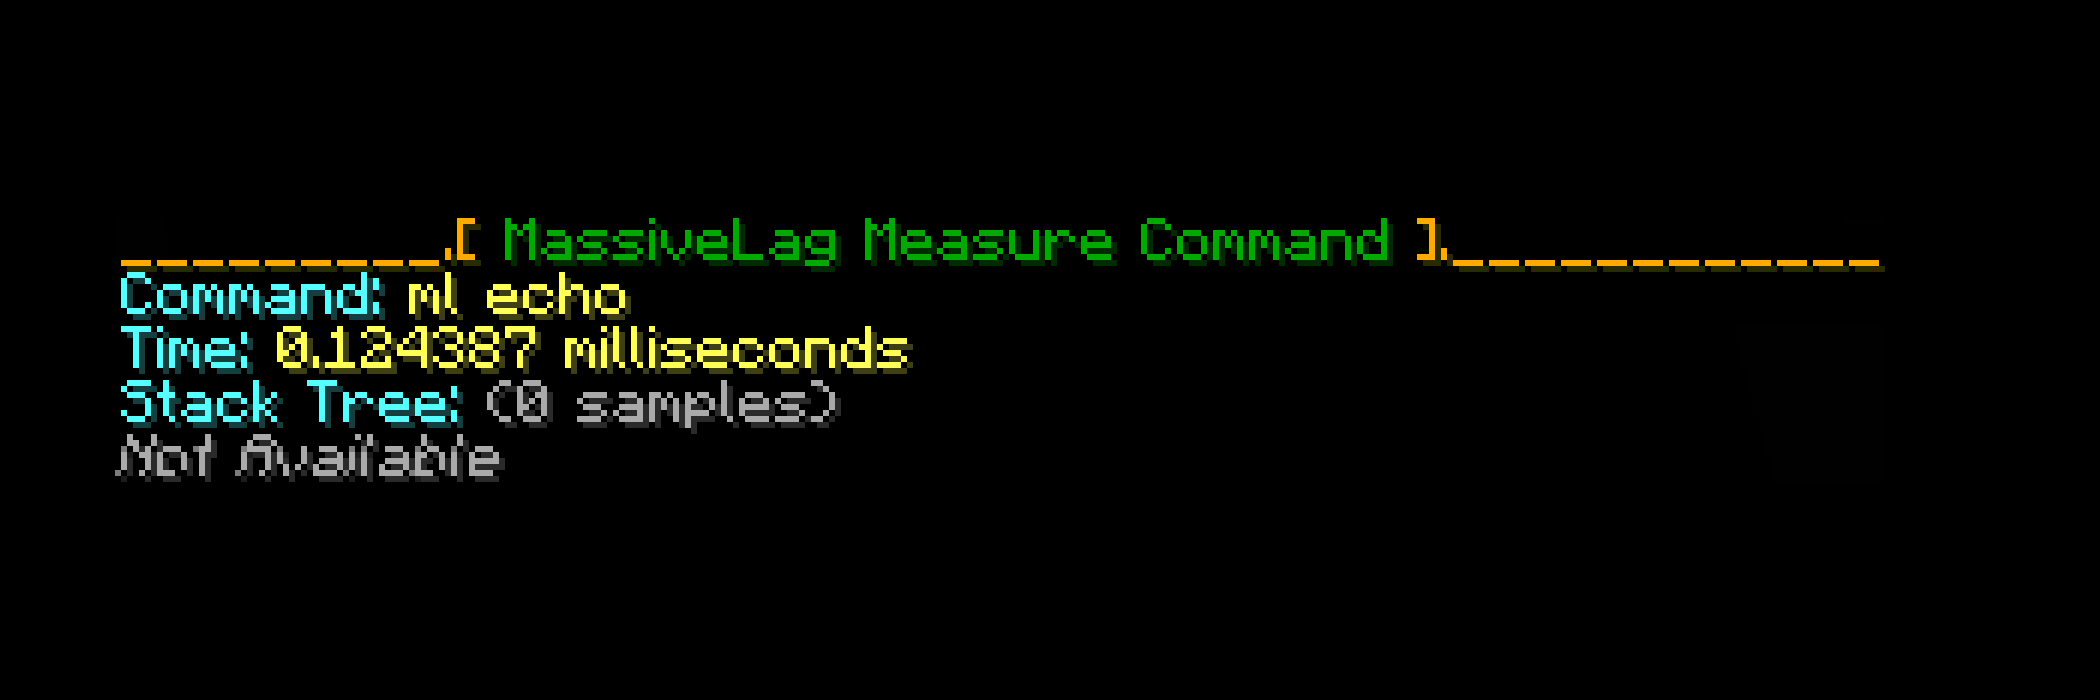 massivelag-command-measure.png